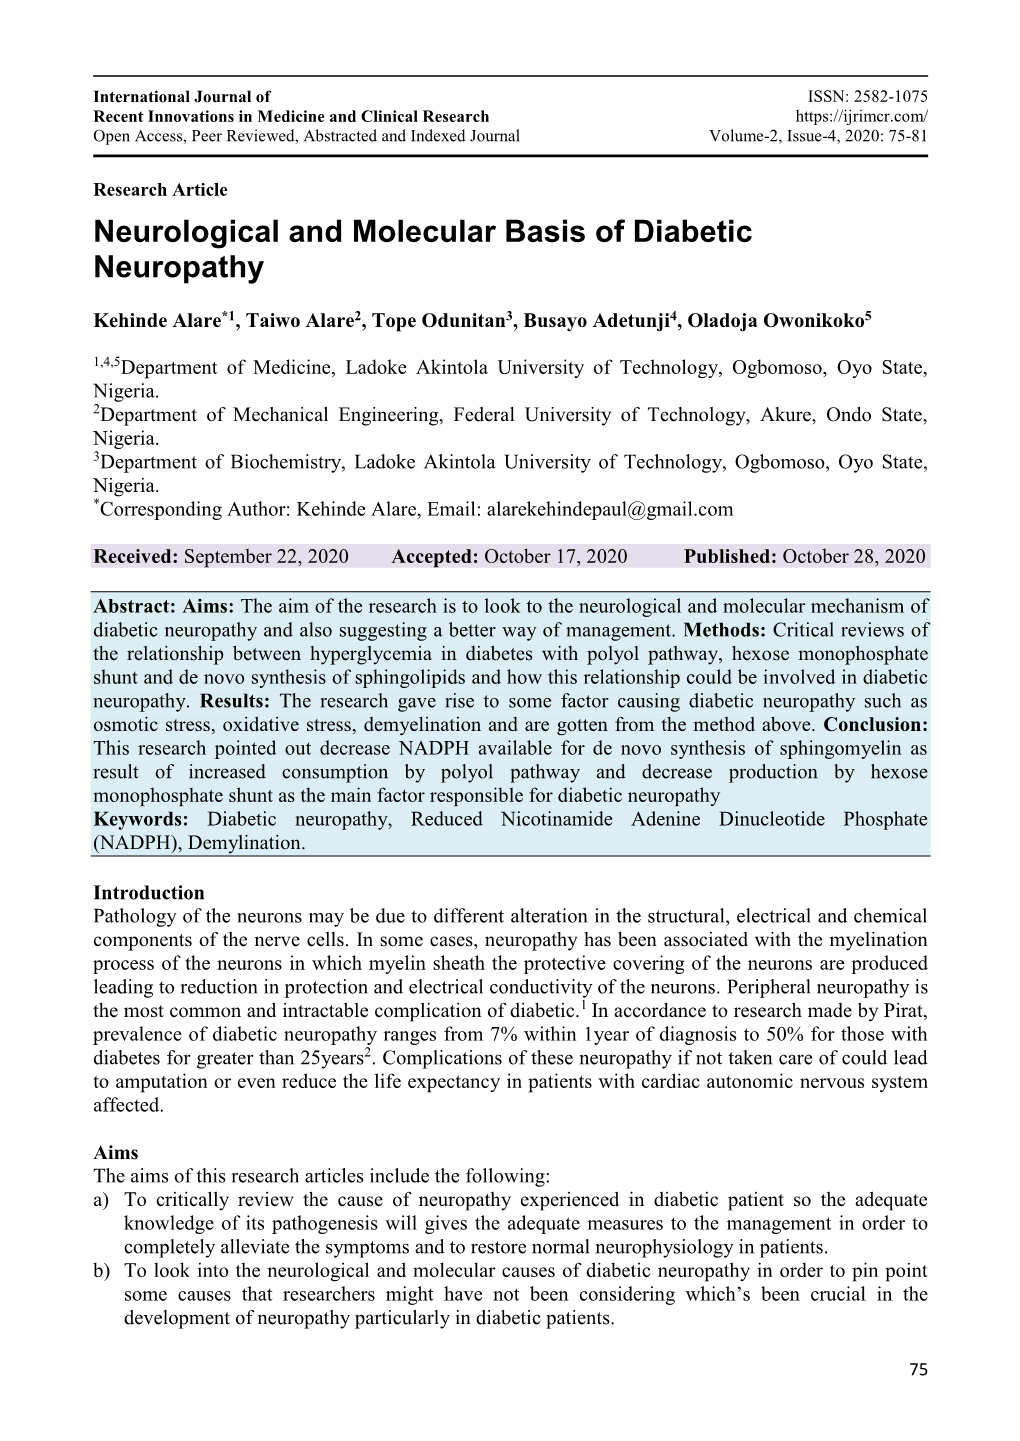 Neurological and Molecular Basis of Diabetic Neuropathy